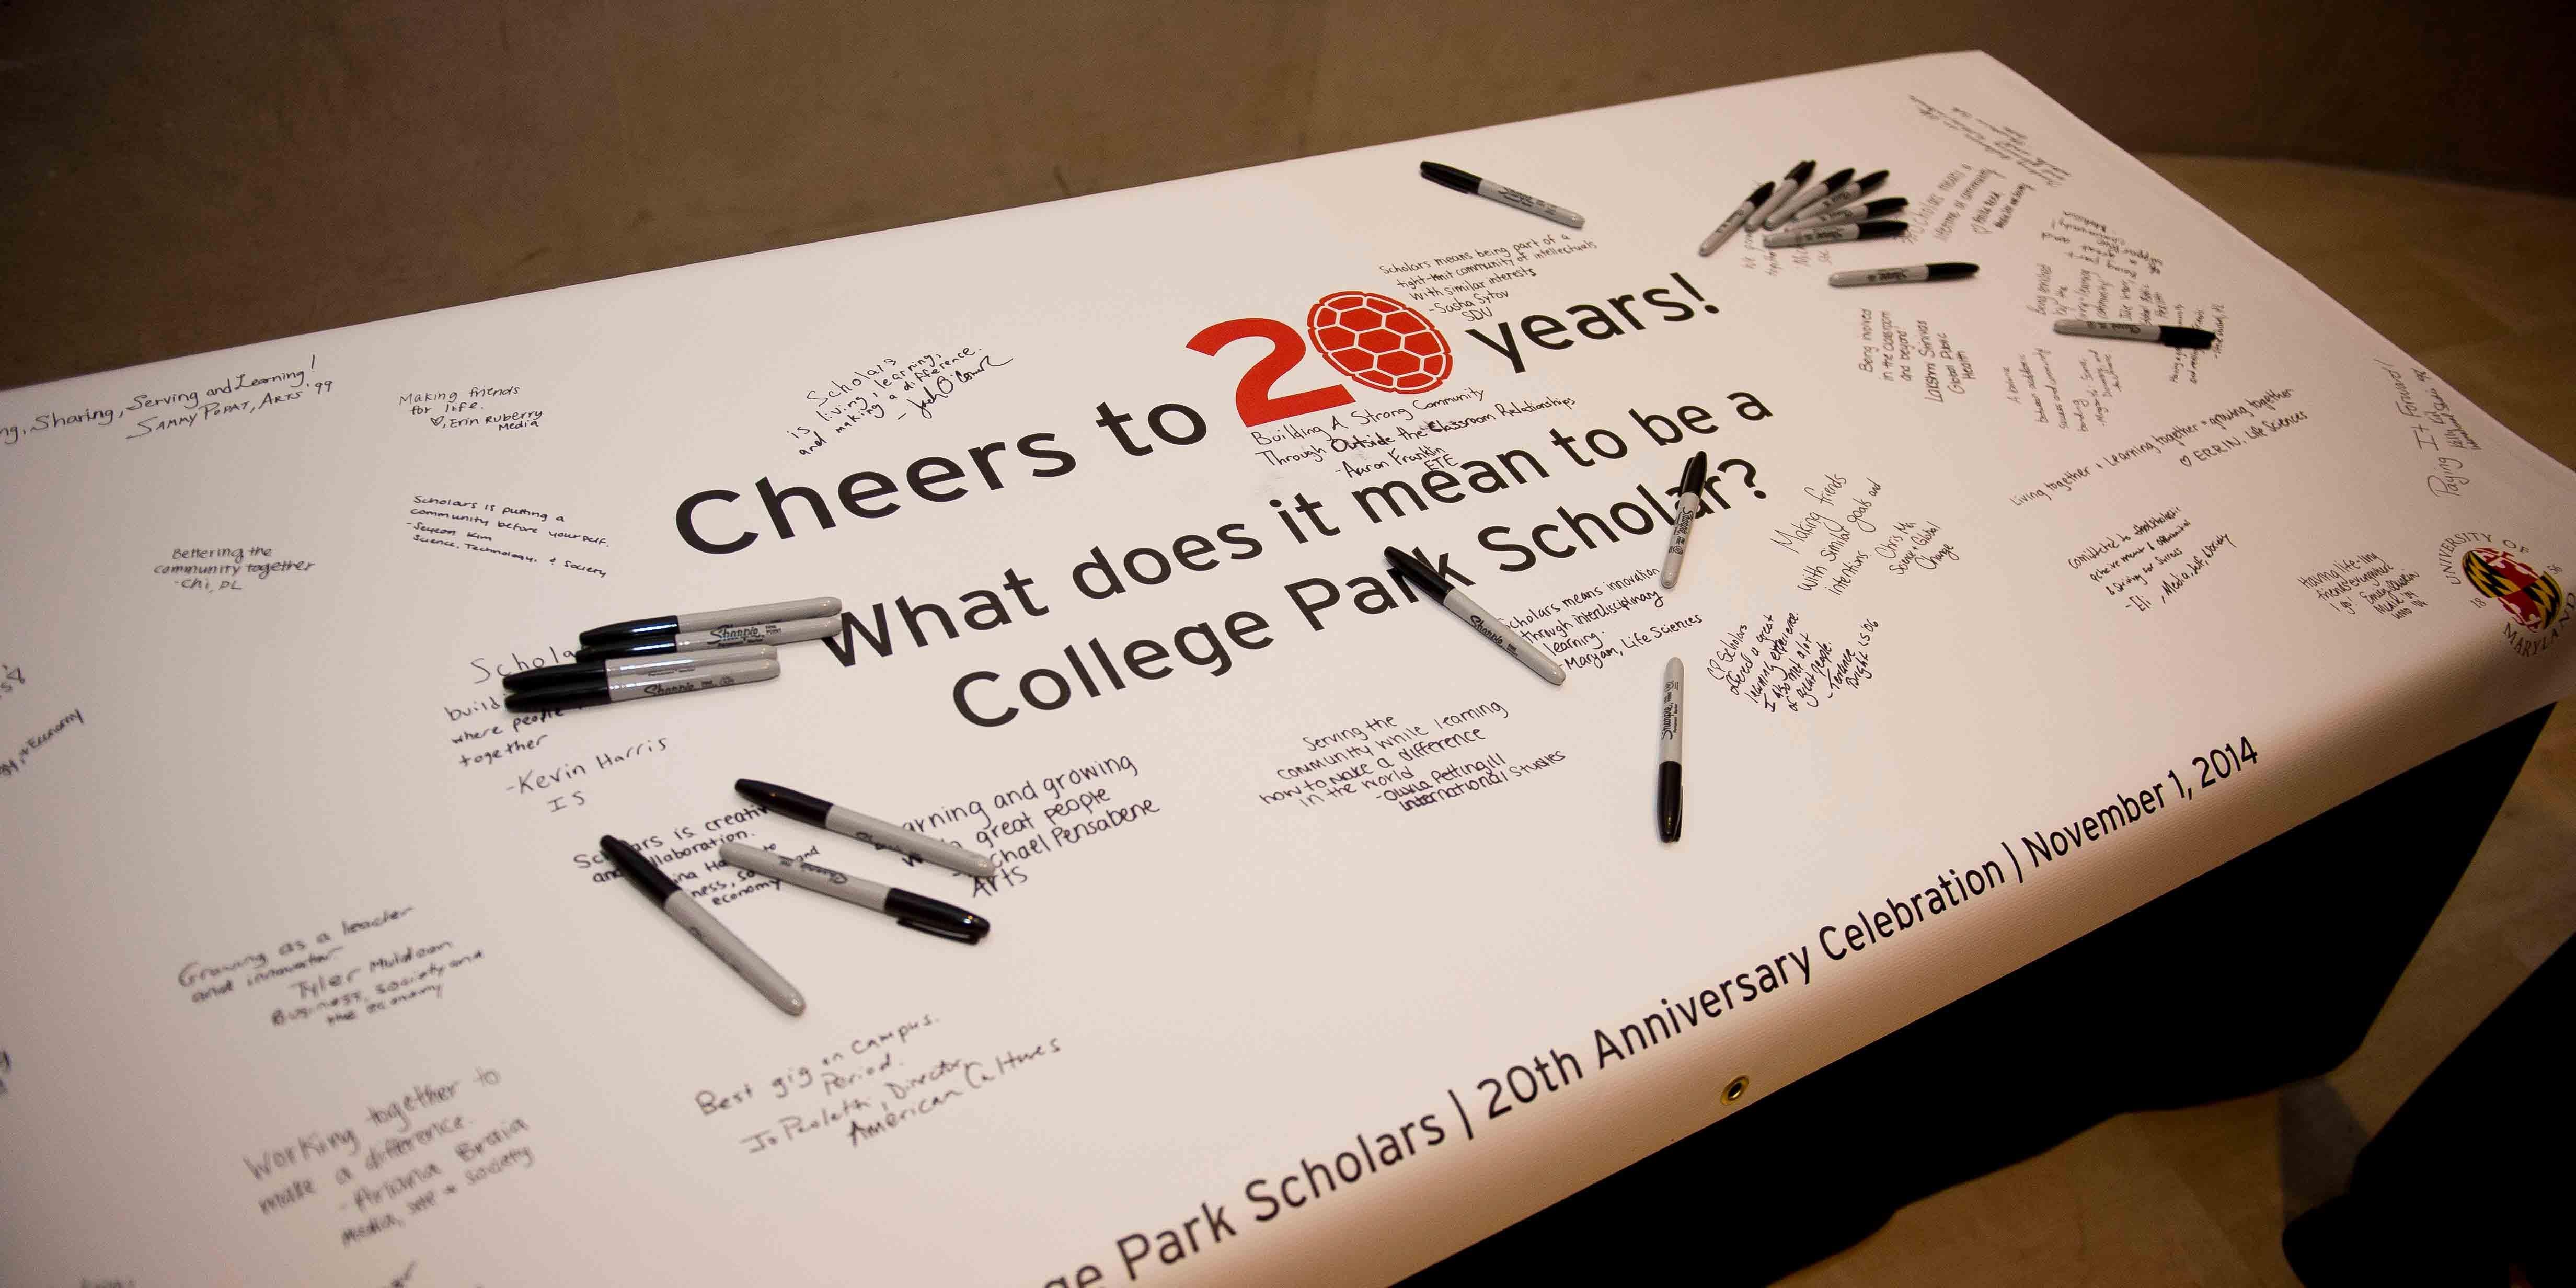 2014, College Park Scholars 20th Gala